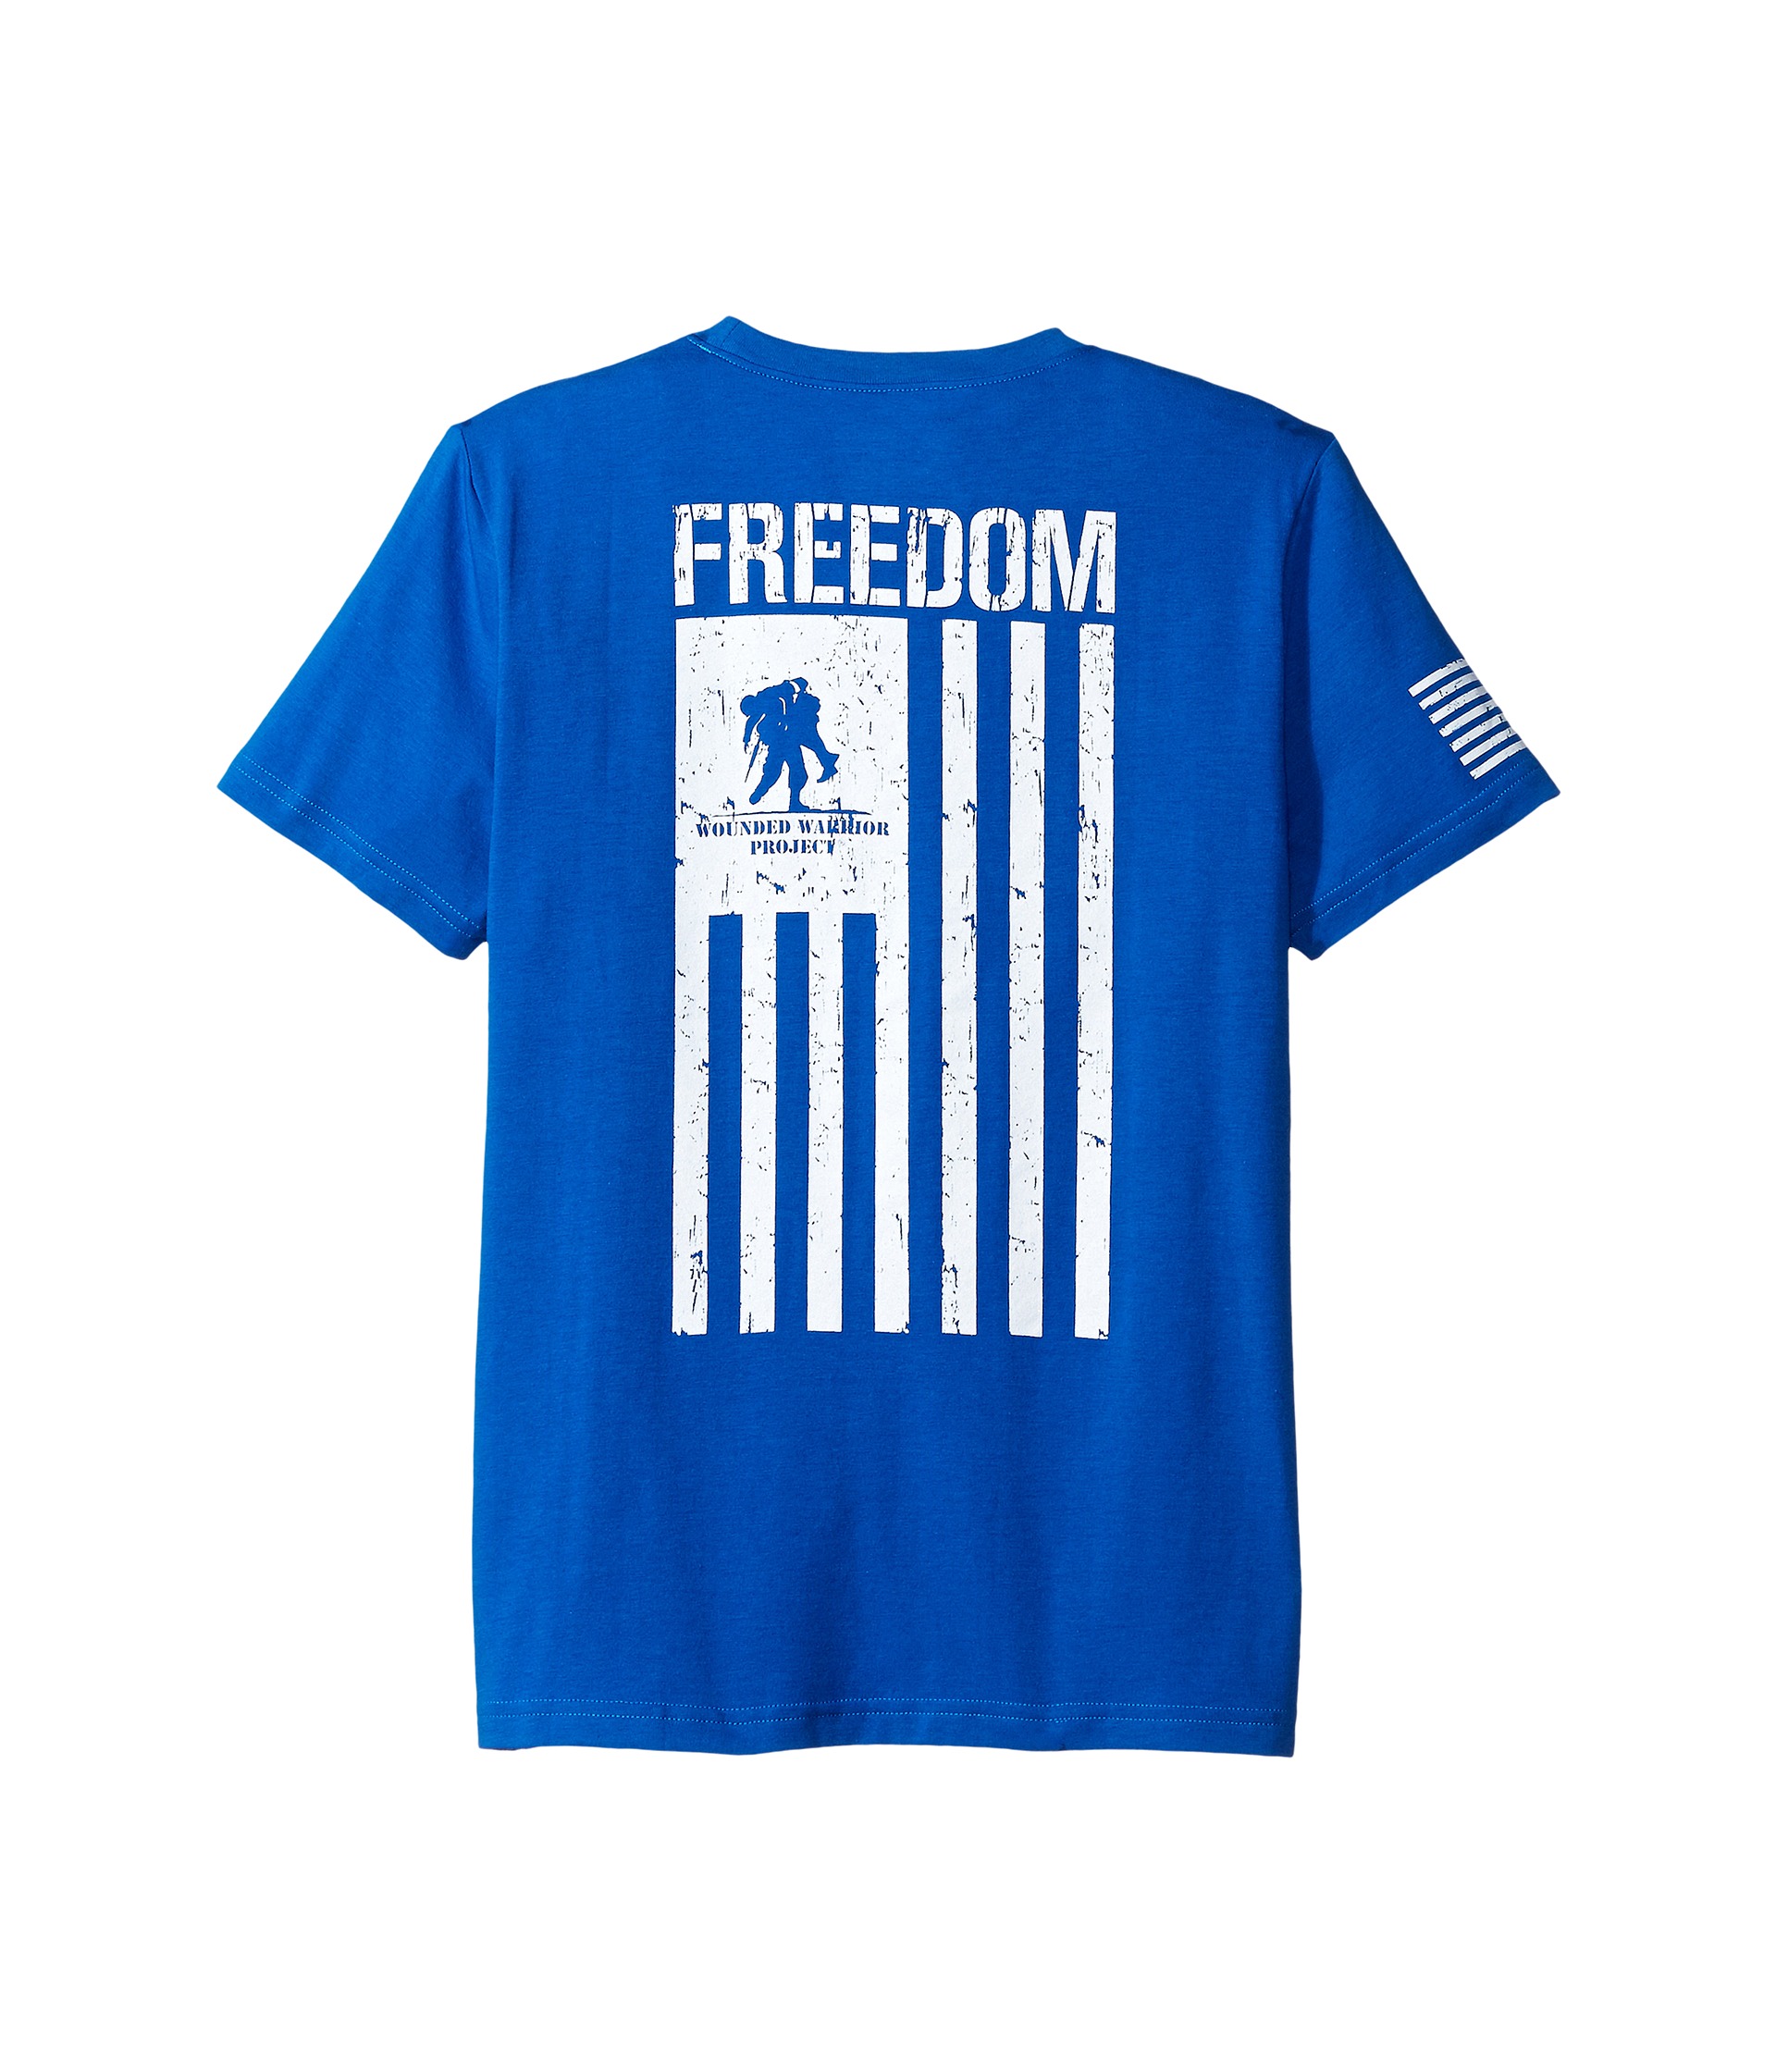 Under Armour Kids Freedom Flag Tee (Big Kids) - Zappos.com Free ...